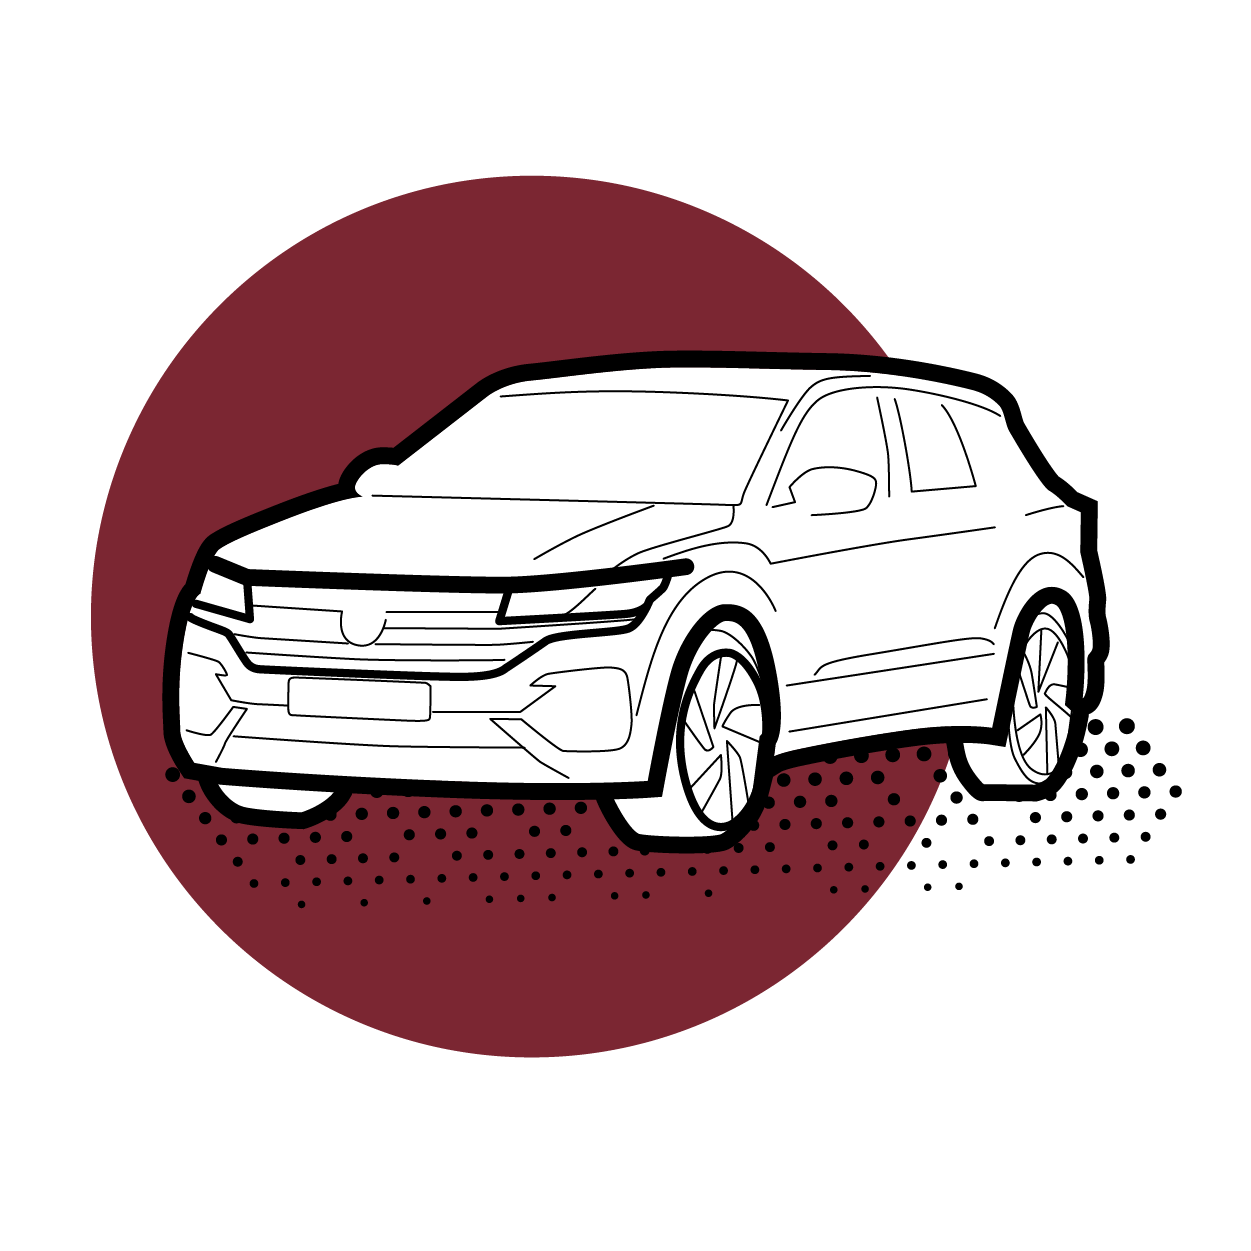 Illustration im Comic-Stil eines VW Tiguan